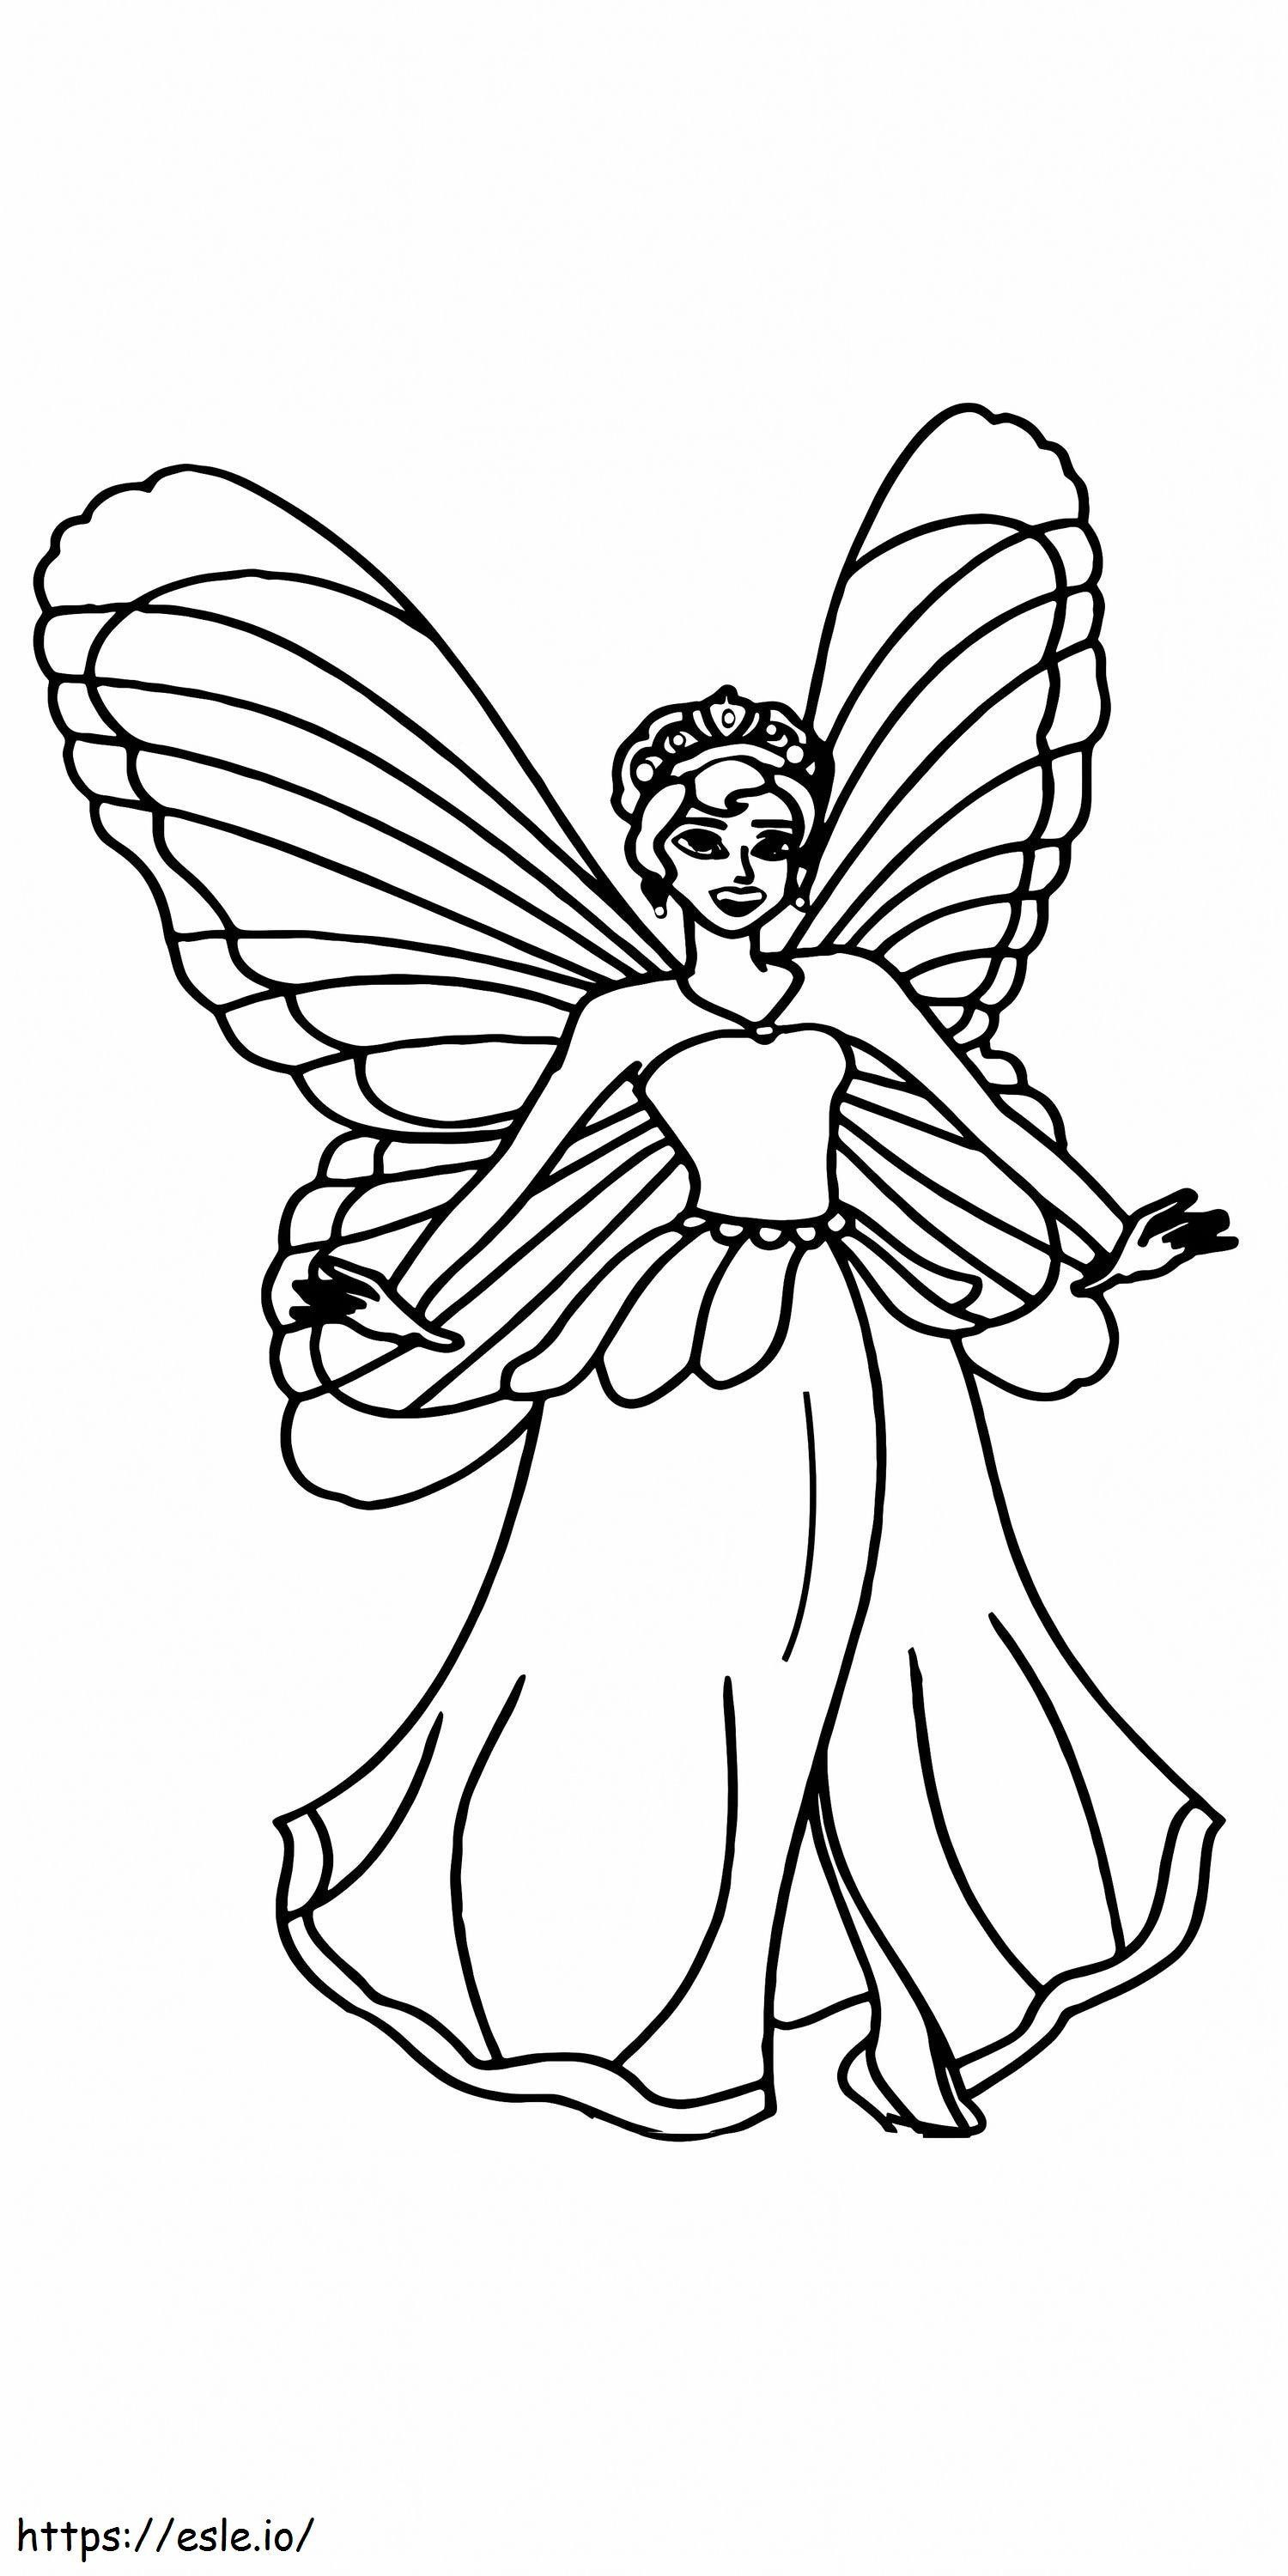 Fairy Princess Printable 6 coloring page